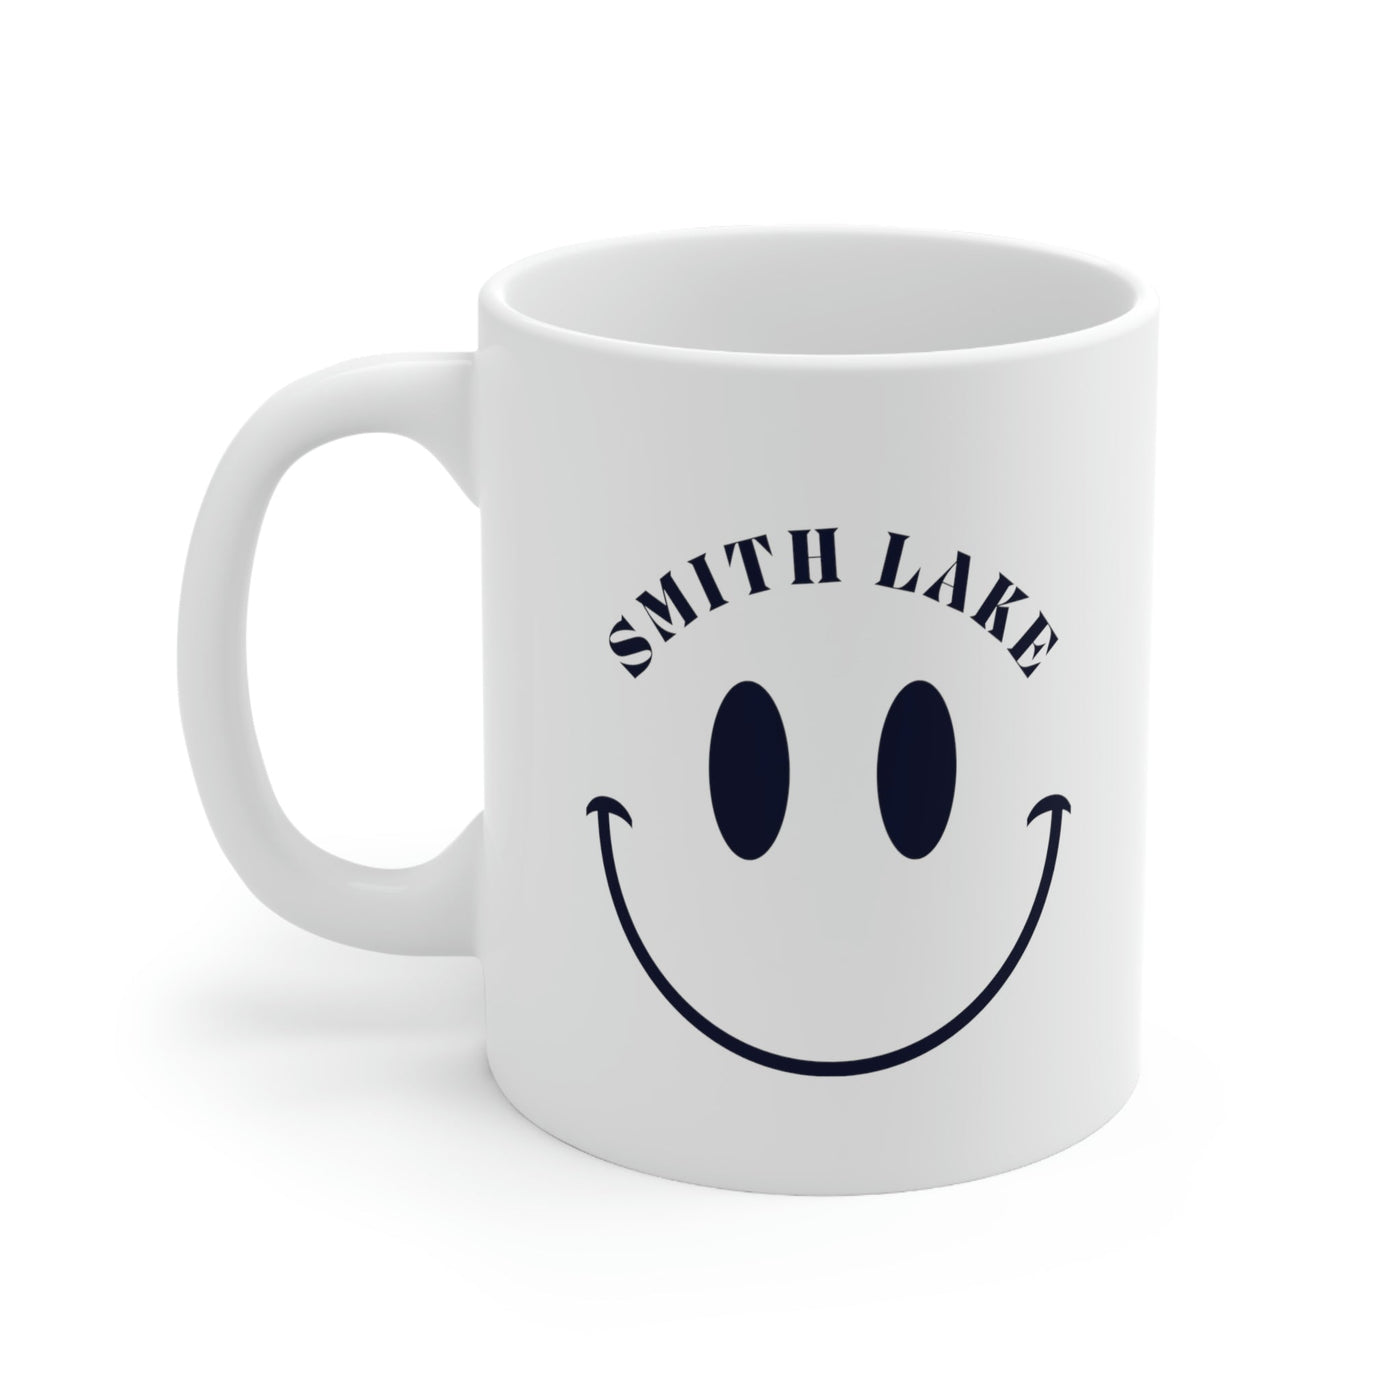 Smith Lake Coffee Mug - Ezra's Clothing